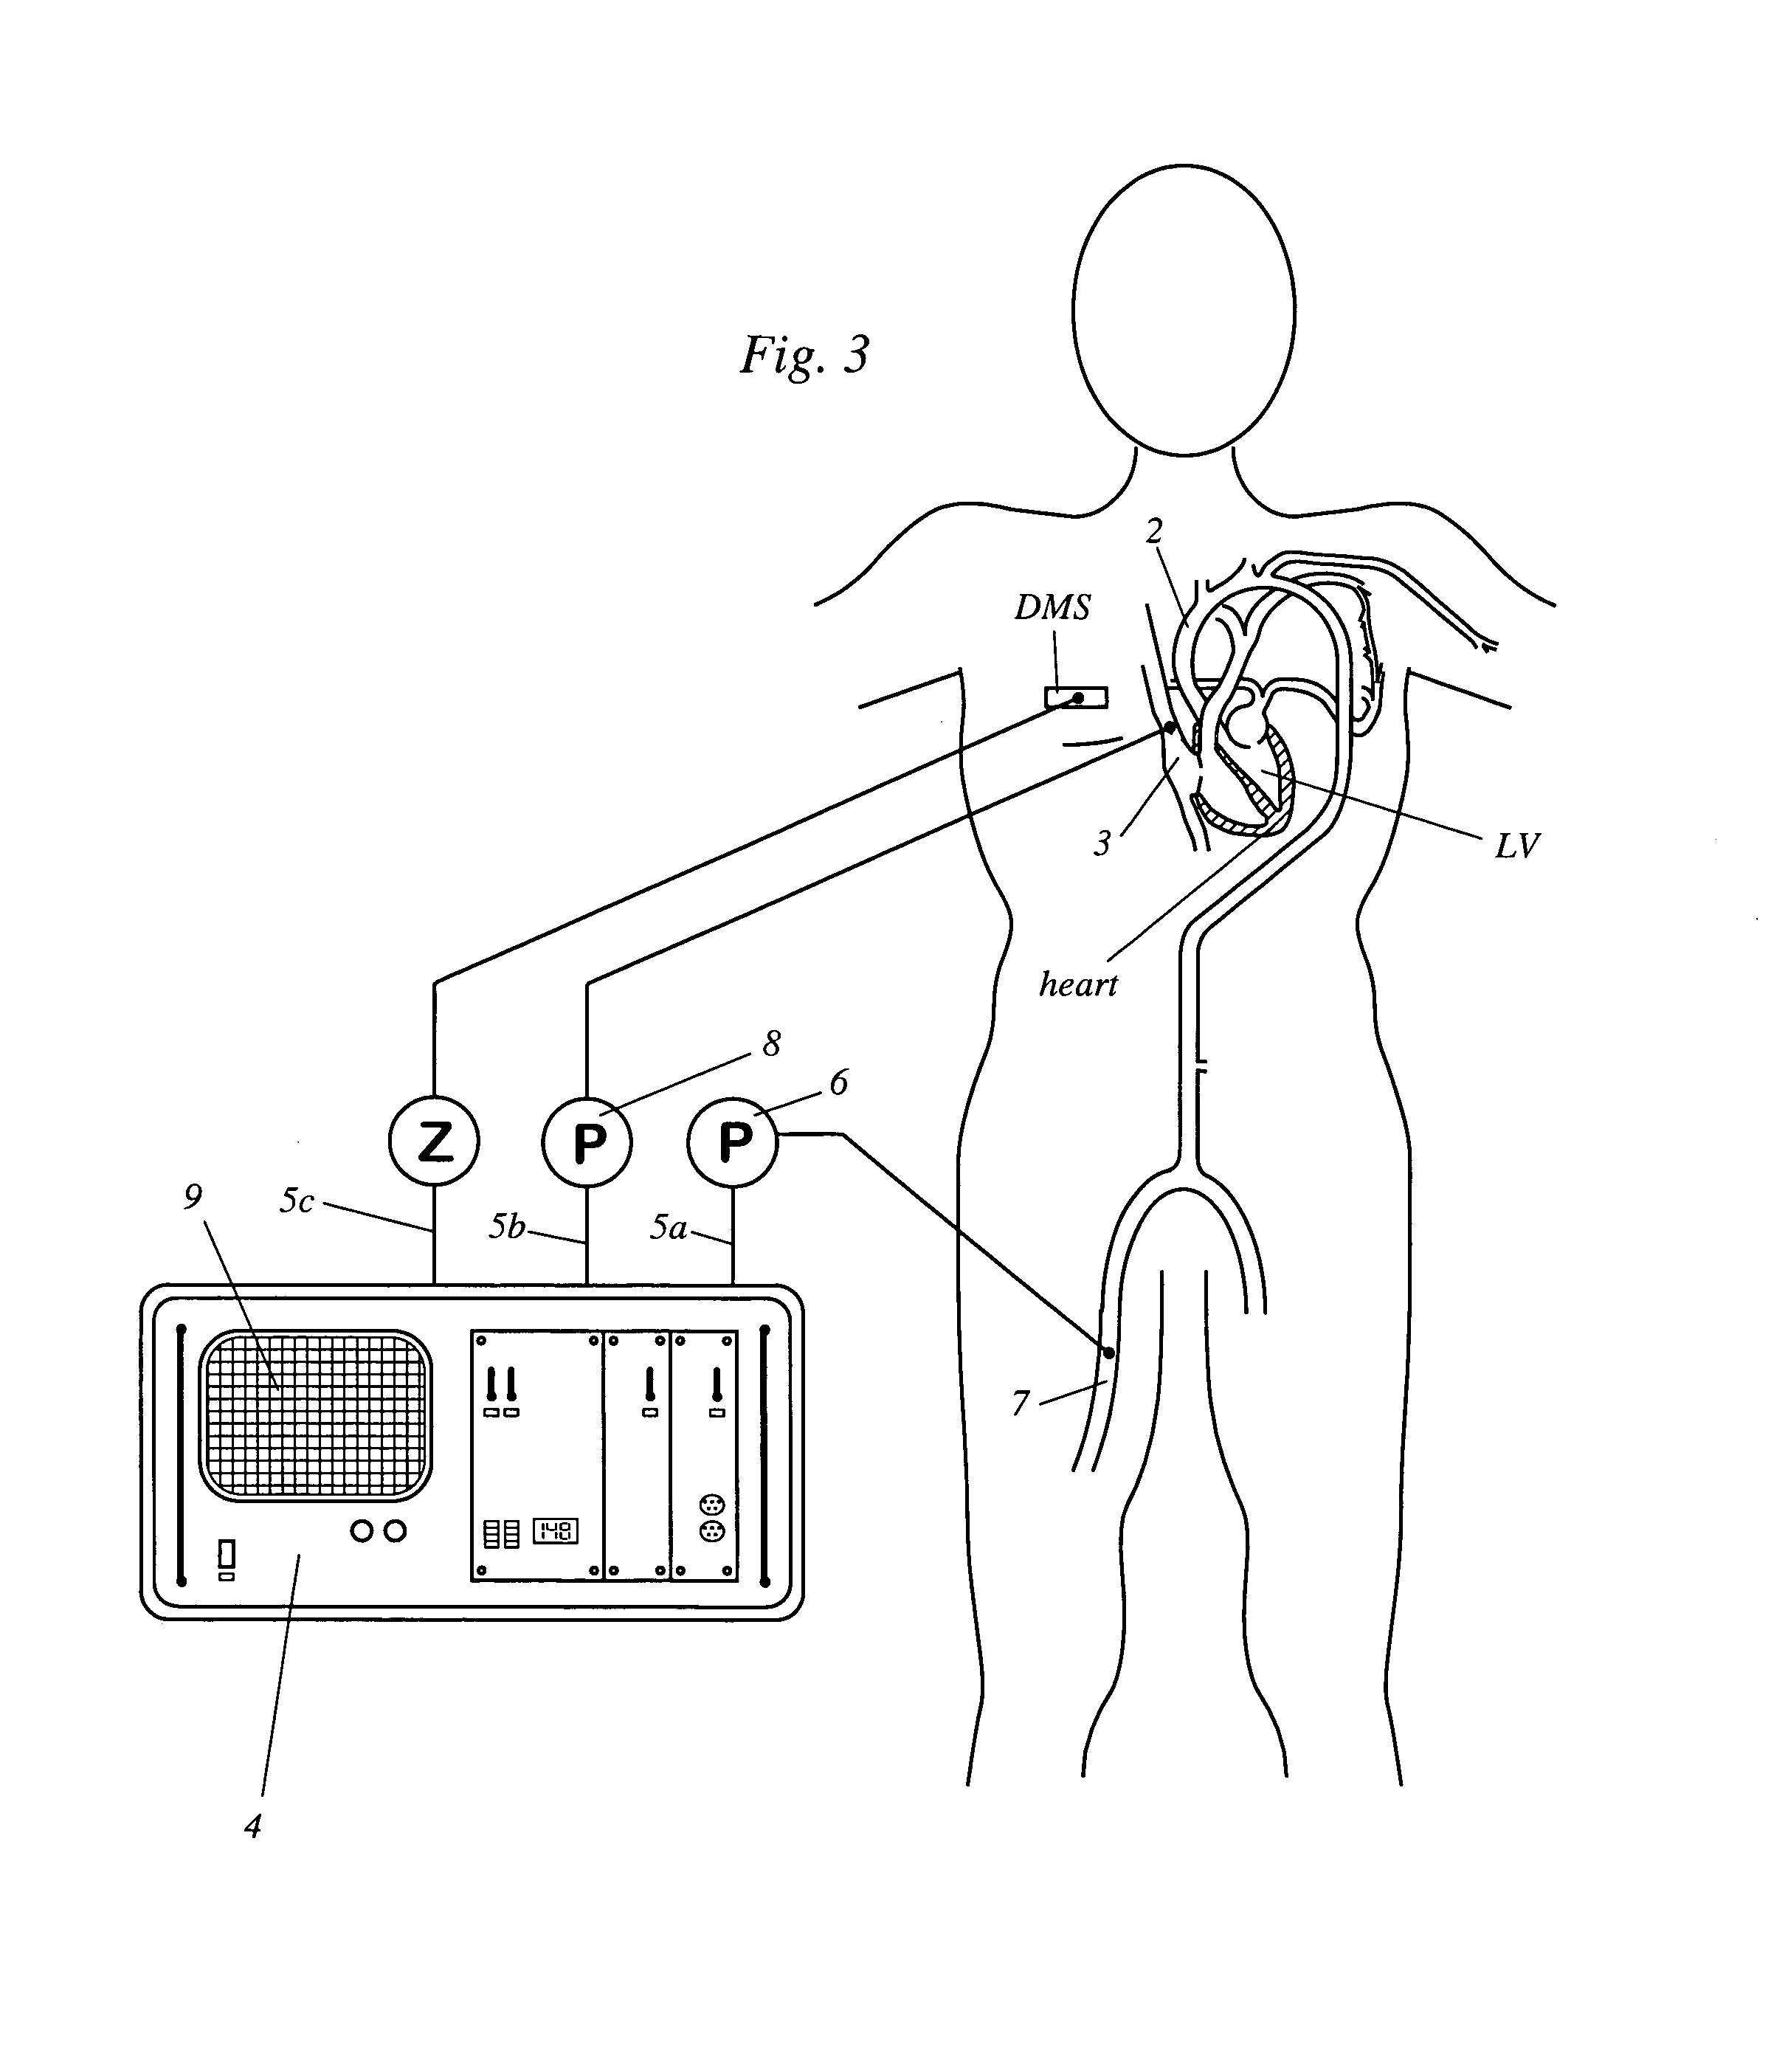 Apparatus for determining cardiovascular parameters